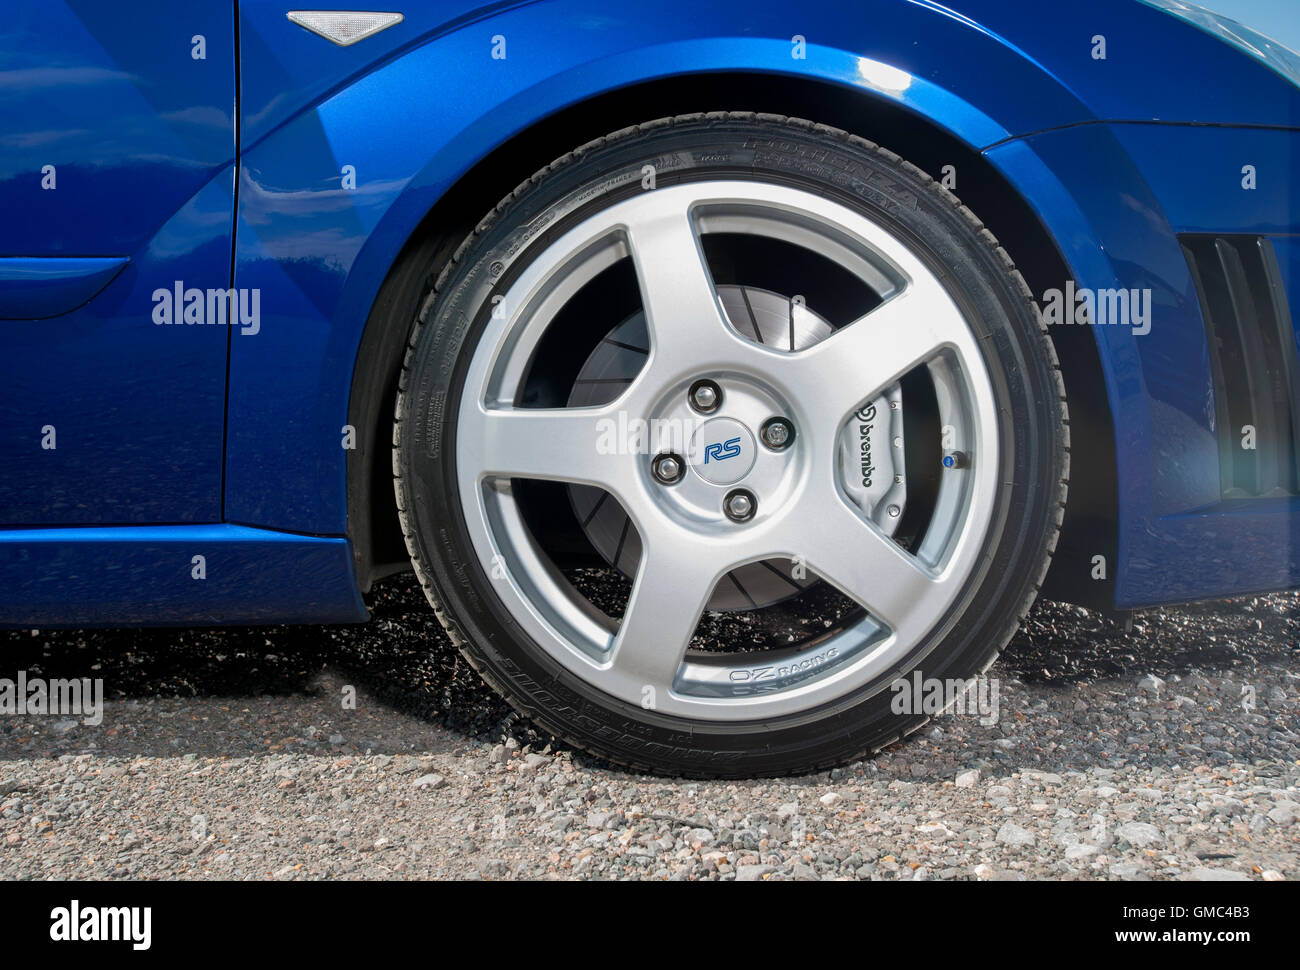 Ford Focus RS Mk1, Hochleistungs-heiße Luke-Auto Stockfoto